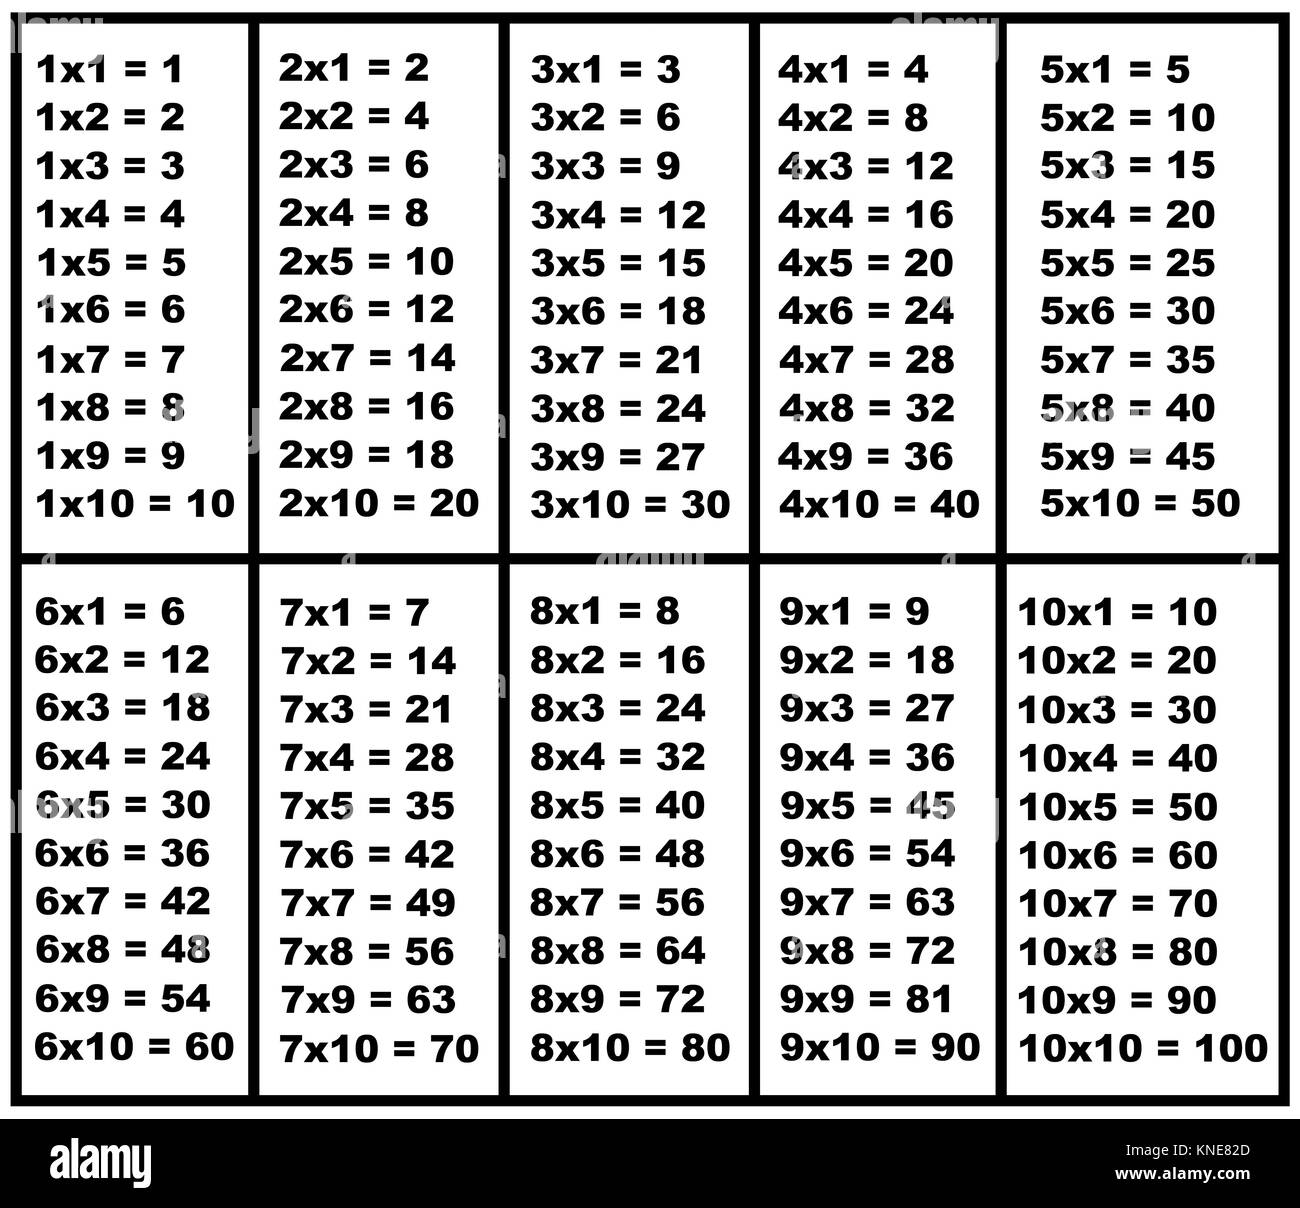 Multiplication table isolated on white Stock Photo - Alamy